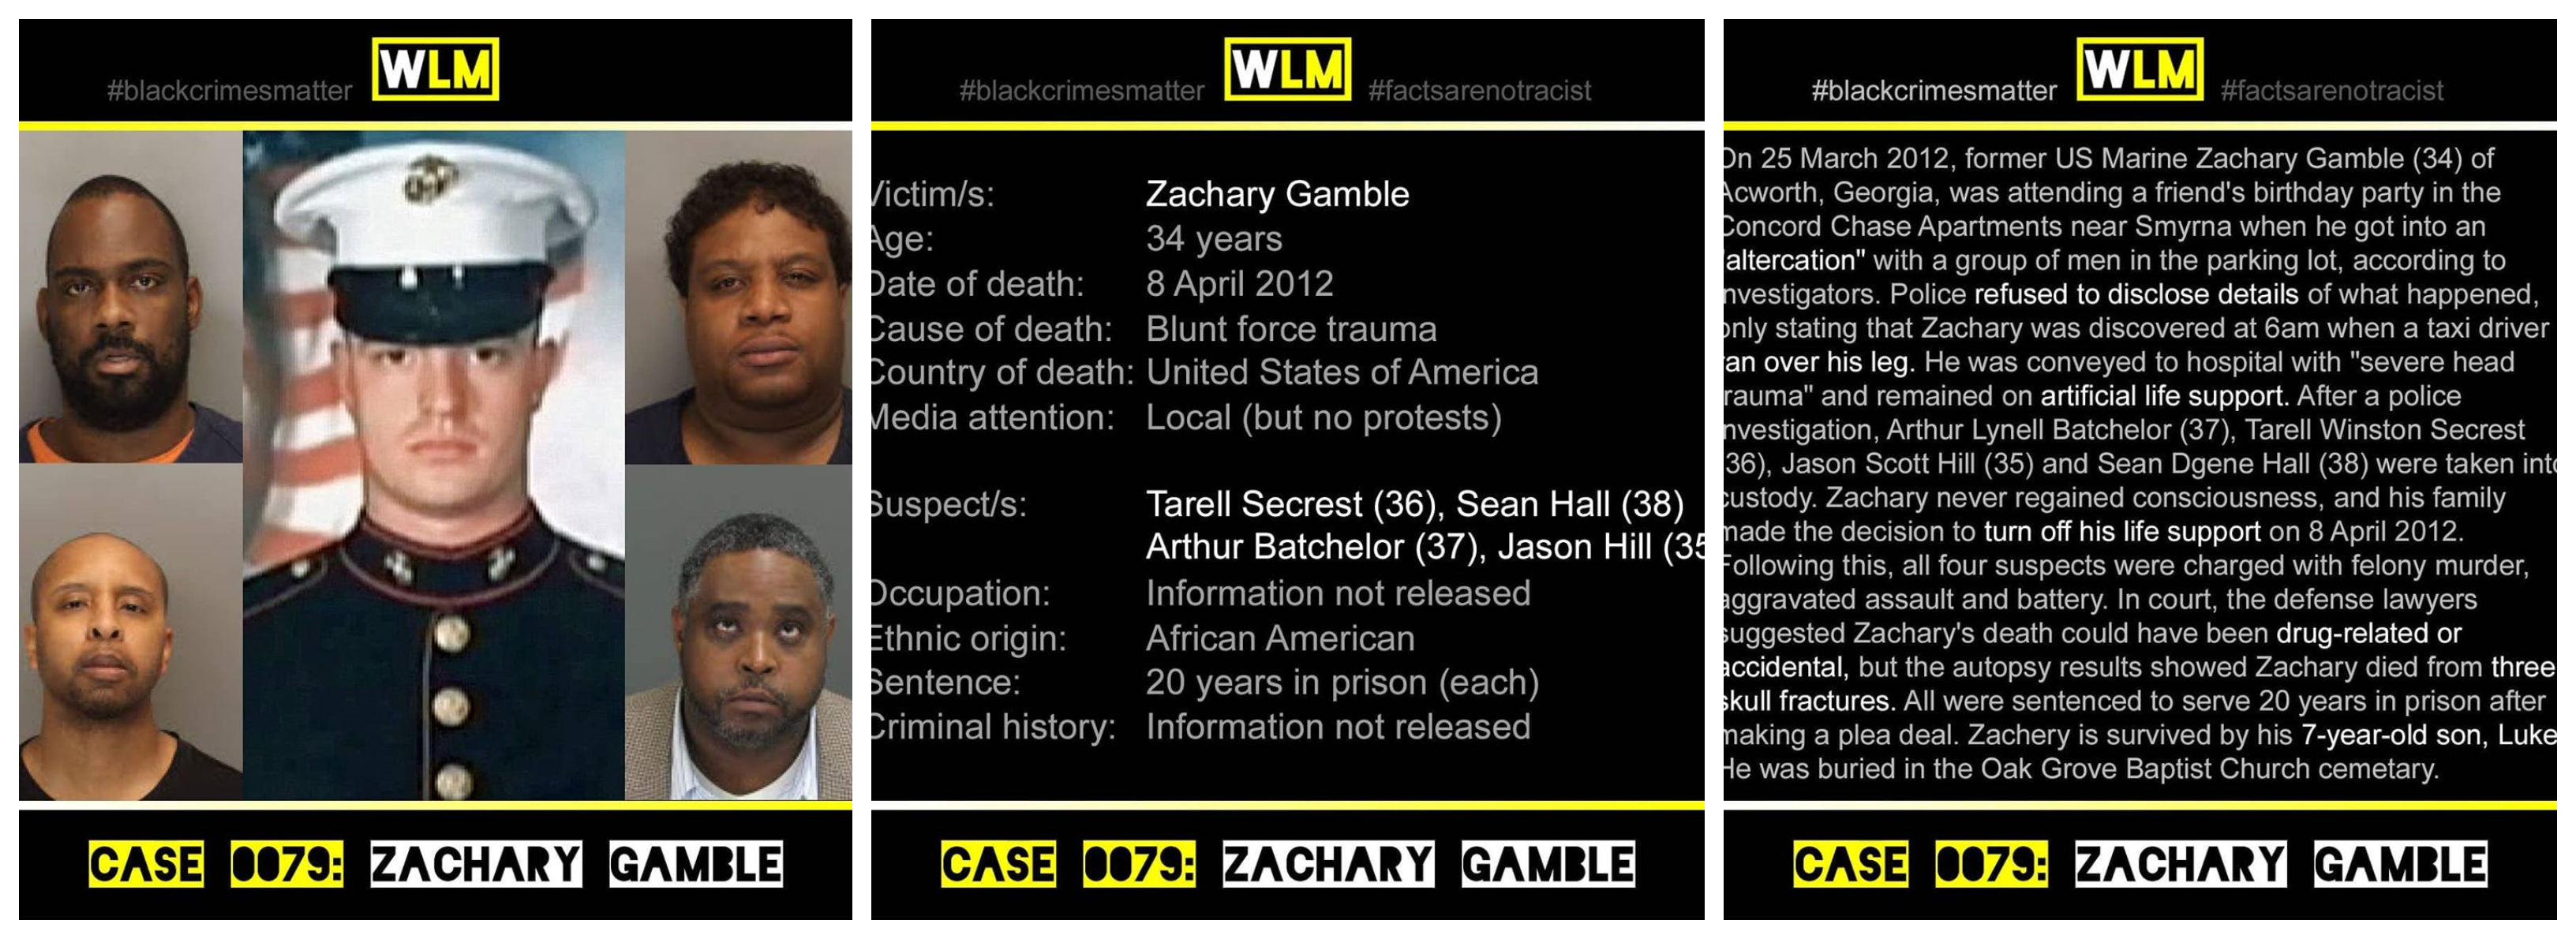 case-079-zachary-gamble